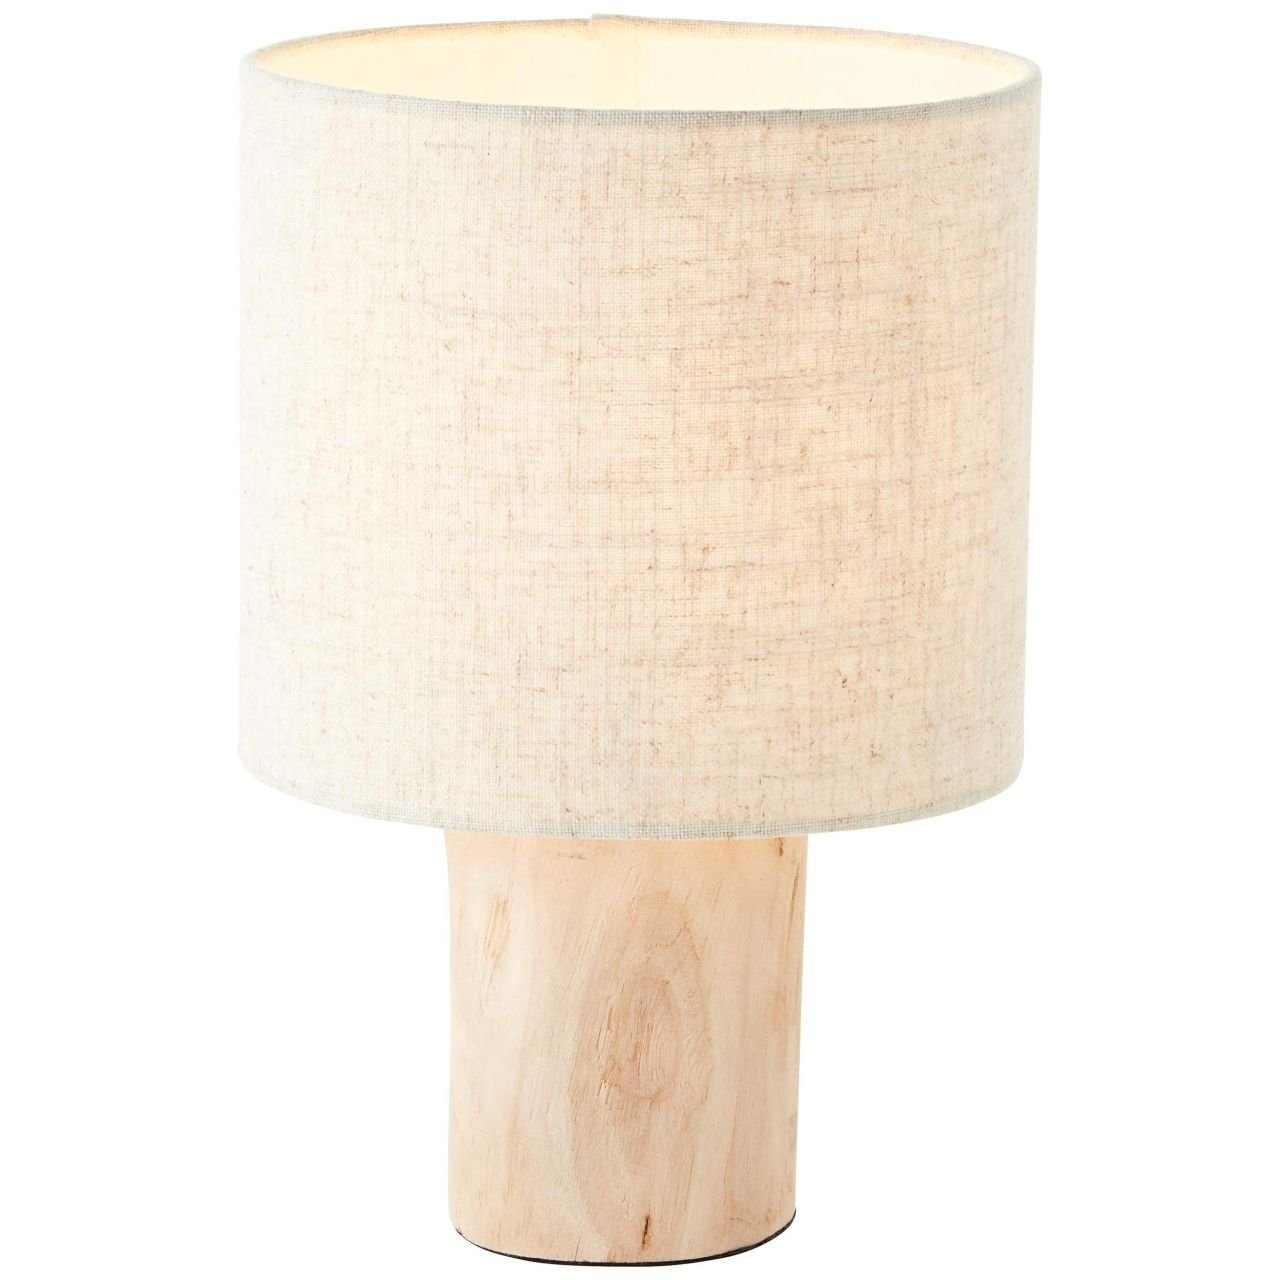 Brilliant Tischleuchte Pia, Lampe, E27, Tischleuchte natur, aus A60, 40W, 1x Holz nachhaltiger Pia